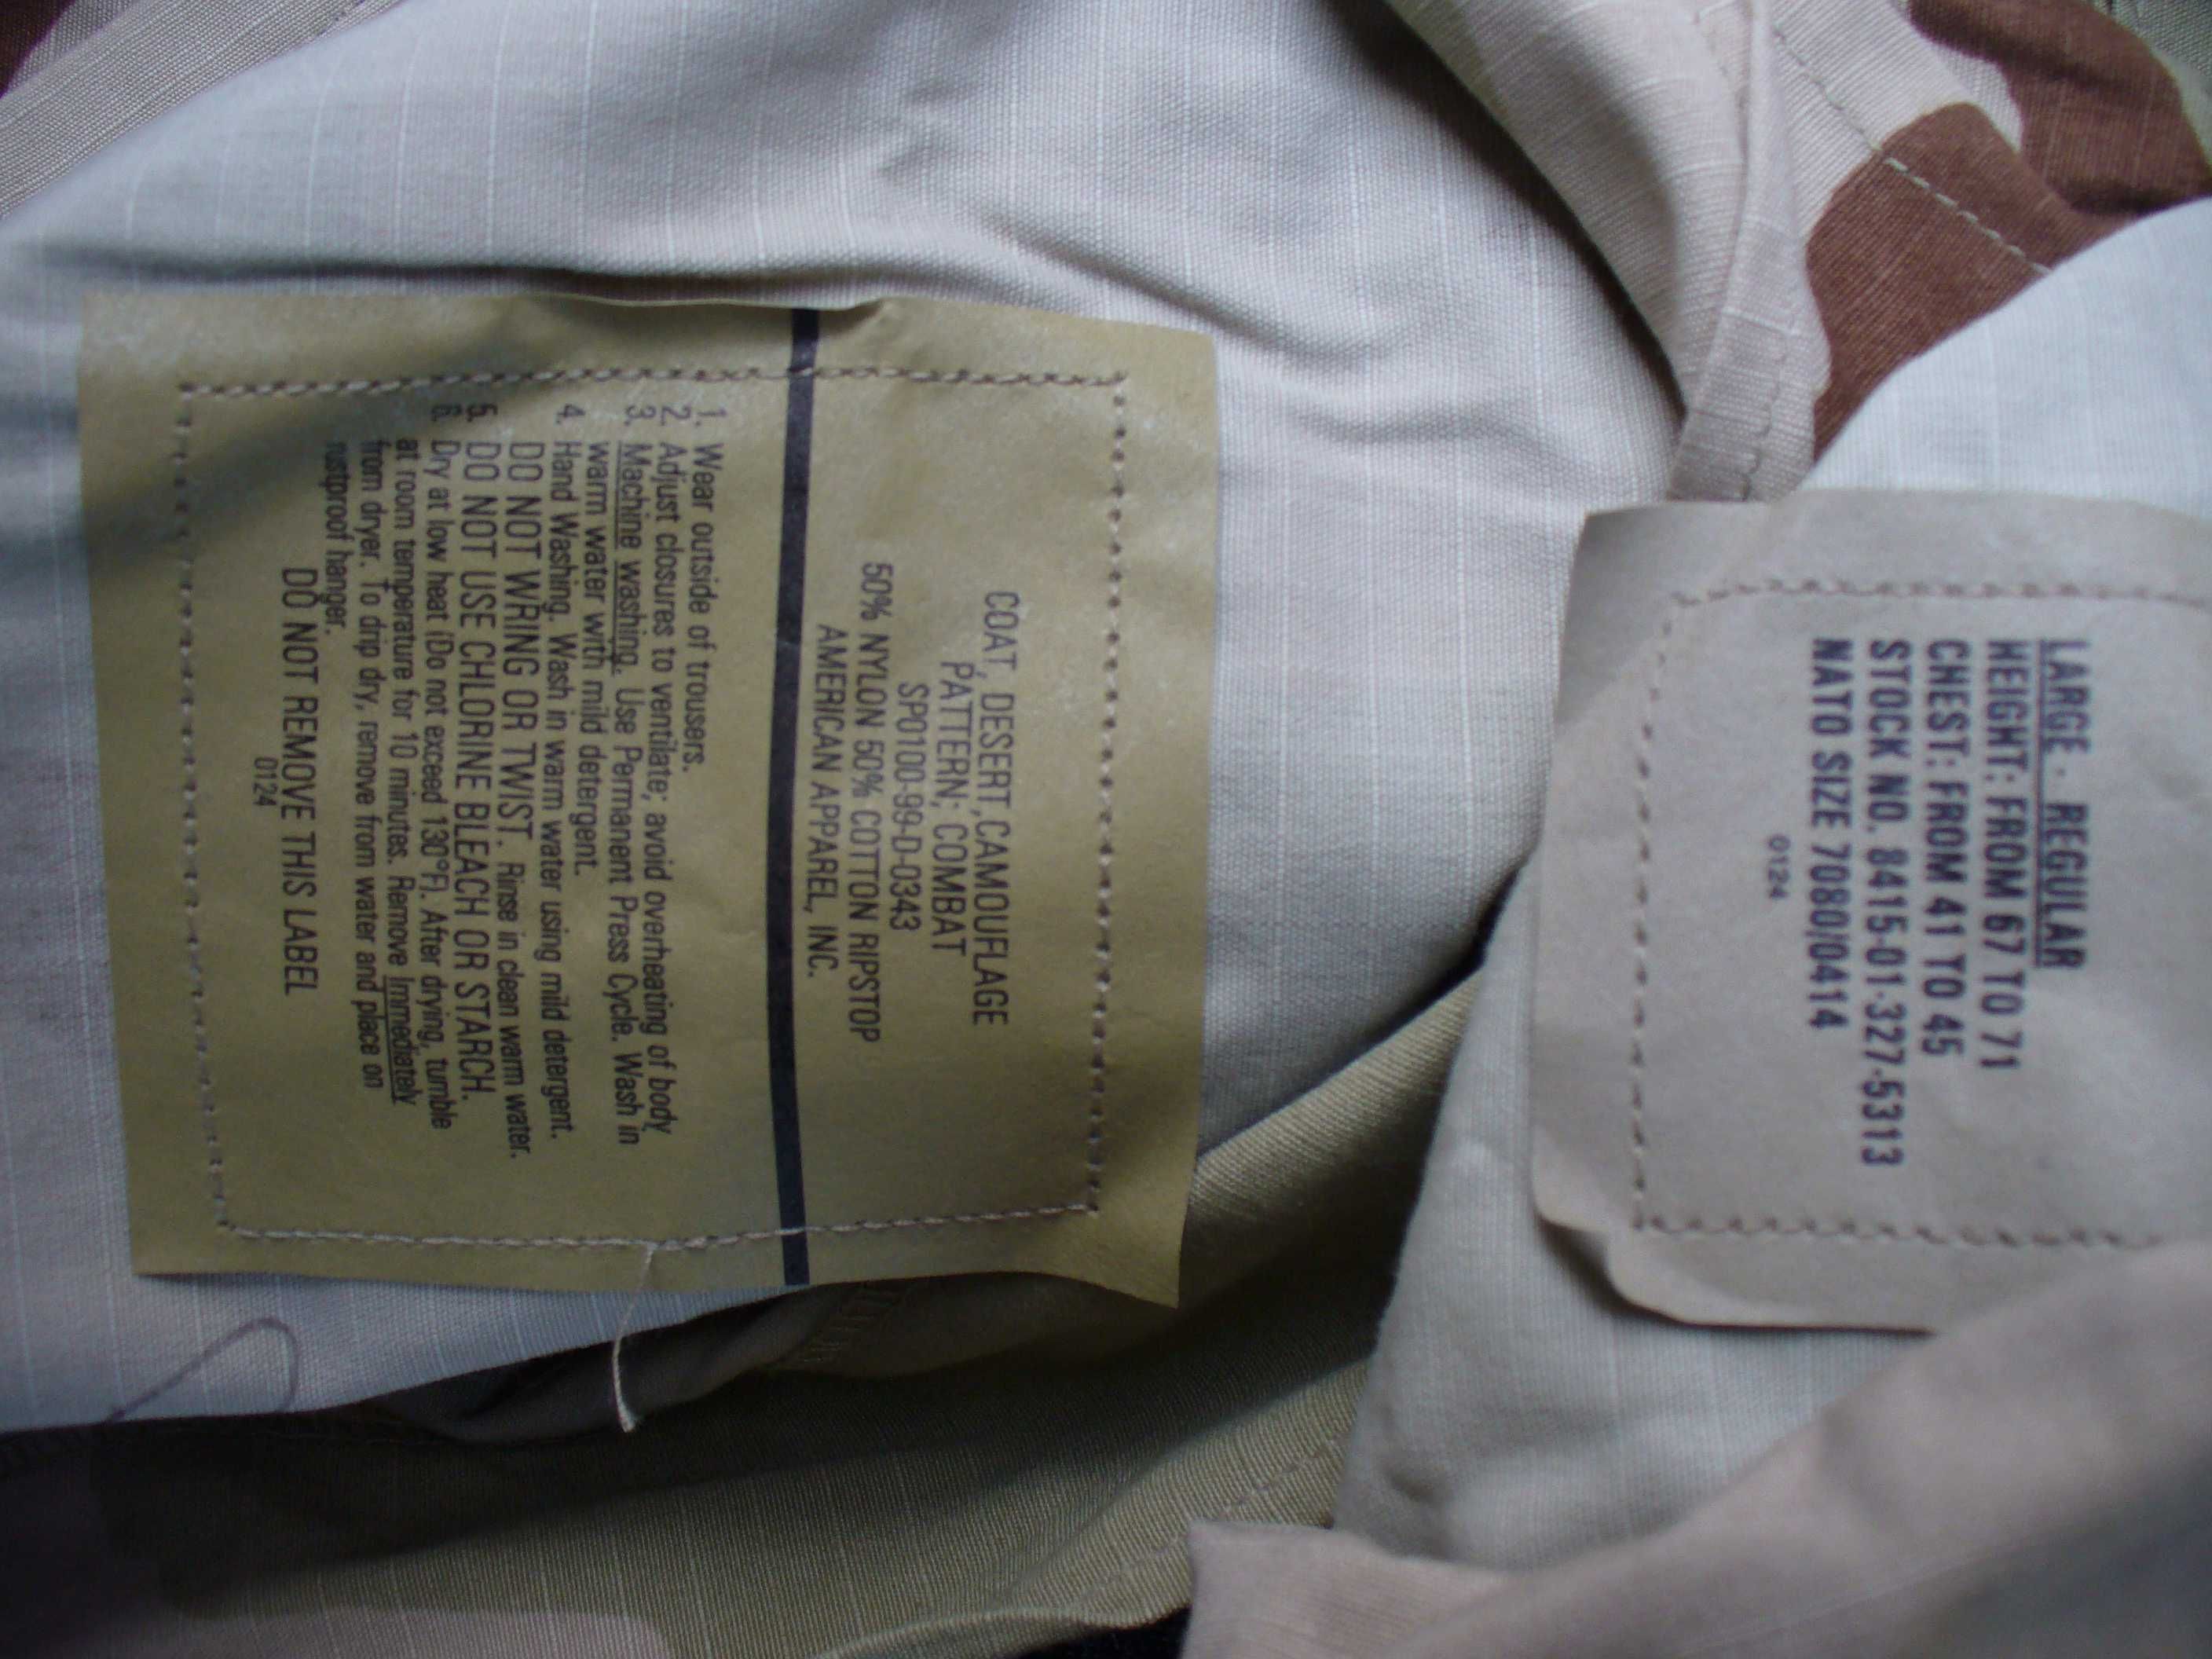 Oryginalna bluza BDU 3 color,desert,nowa MR,LR ,US Army